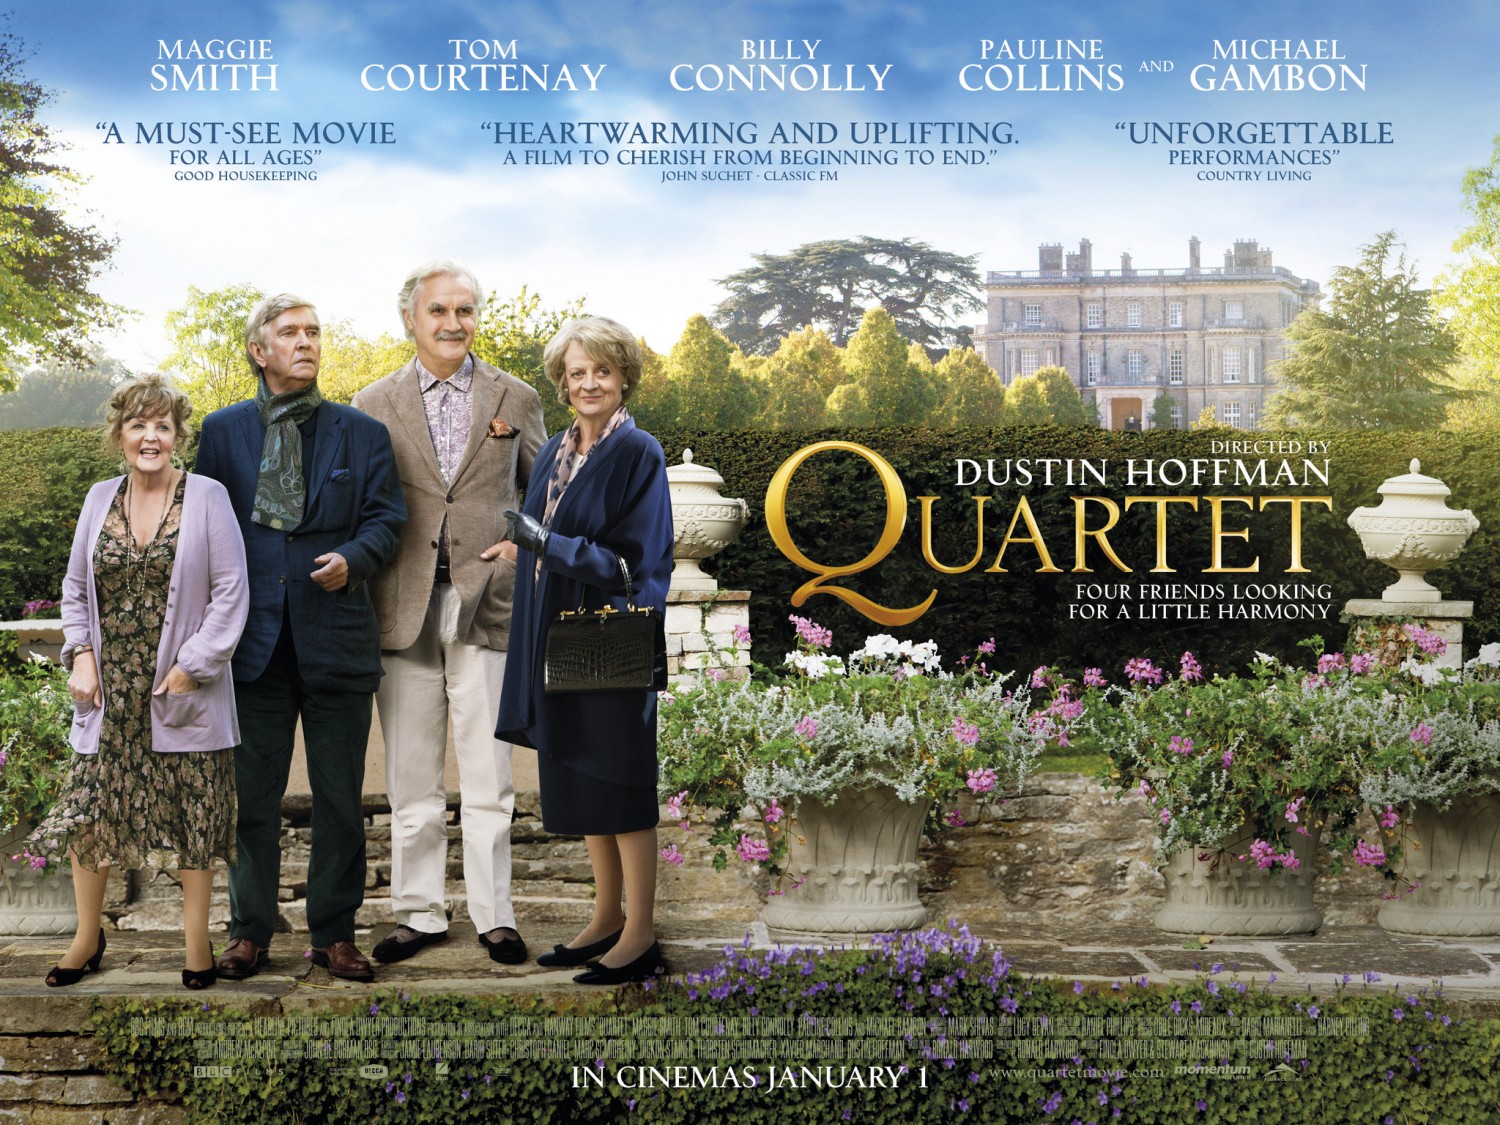 Extra Large Movie Poster Image for Quartet